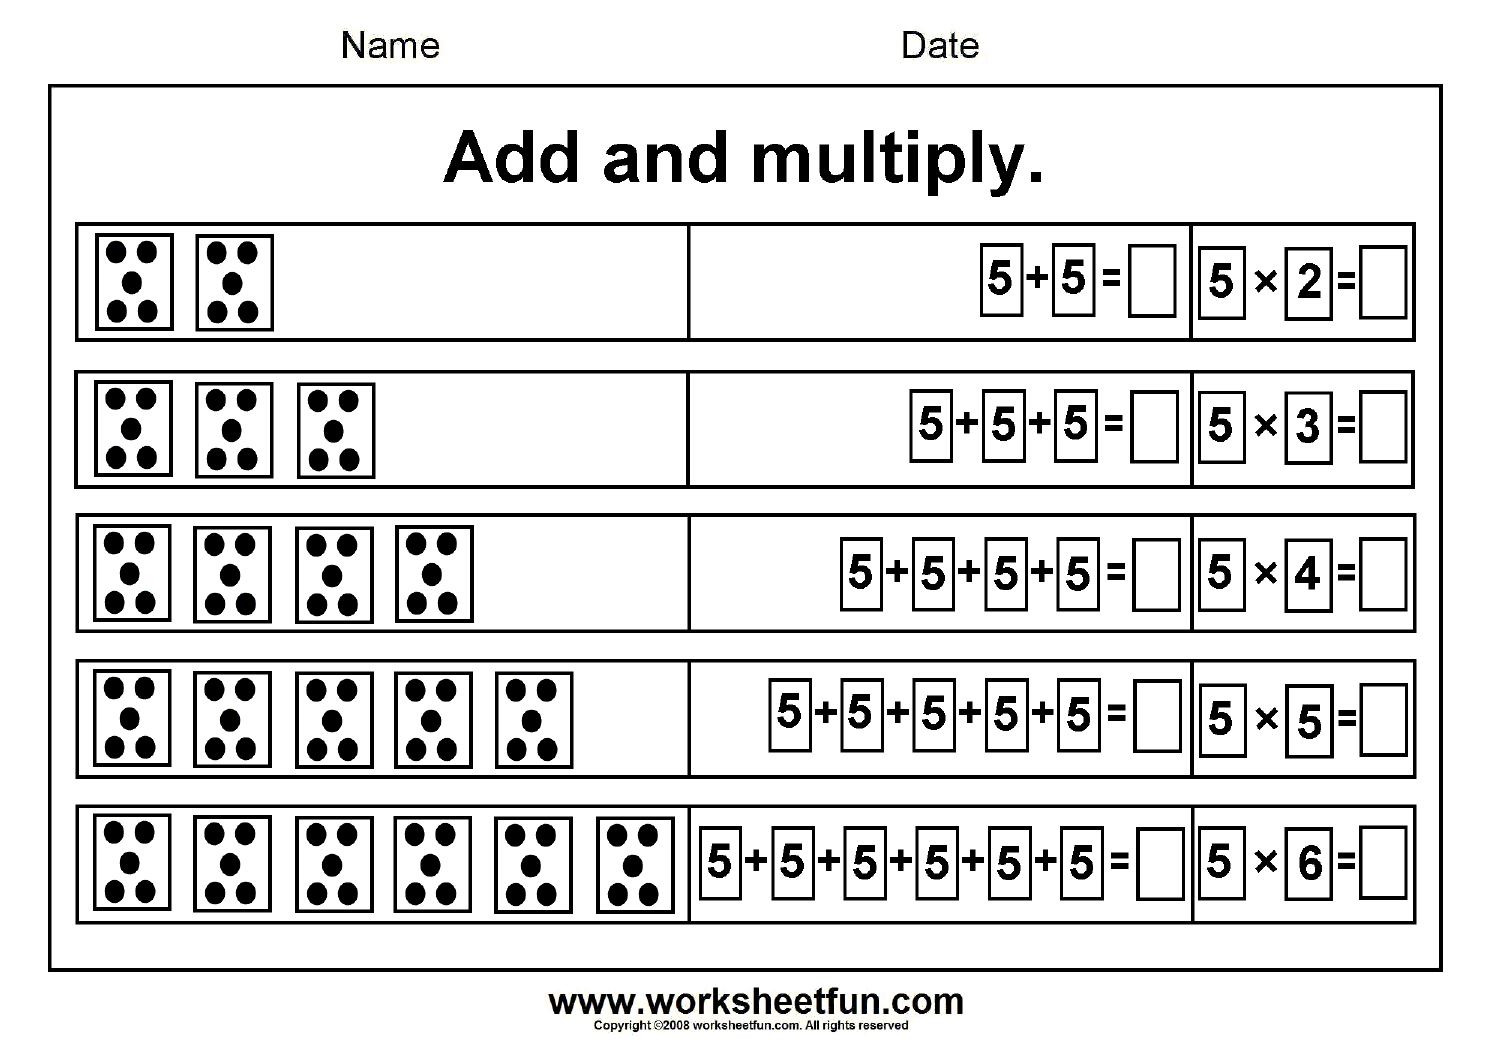 Multiplication Worksheets For Beginners Multiarrayscirclenumber